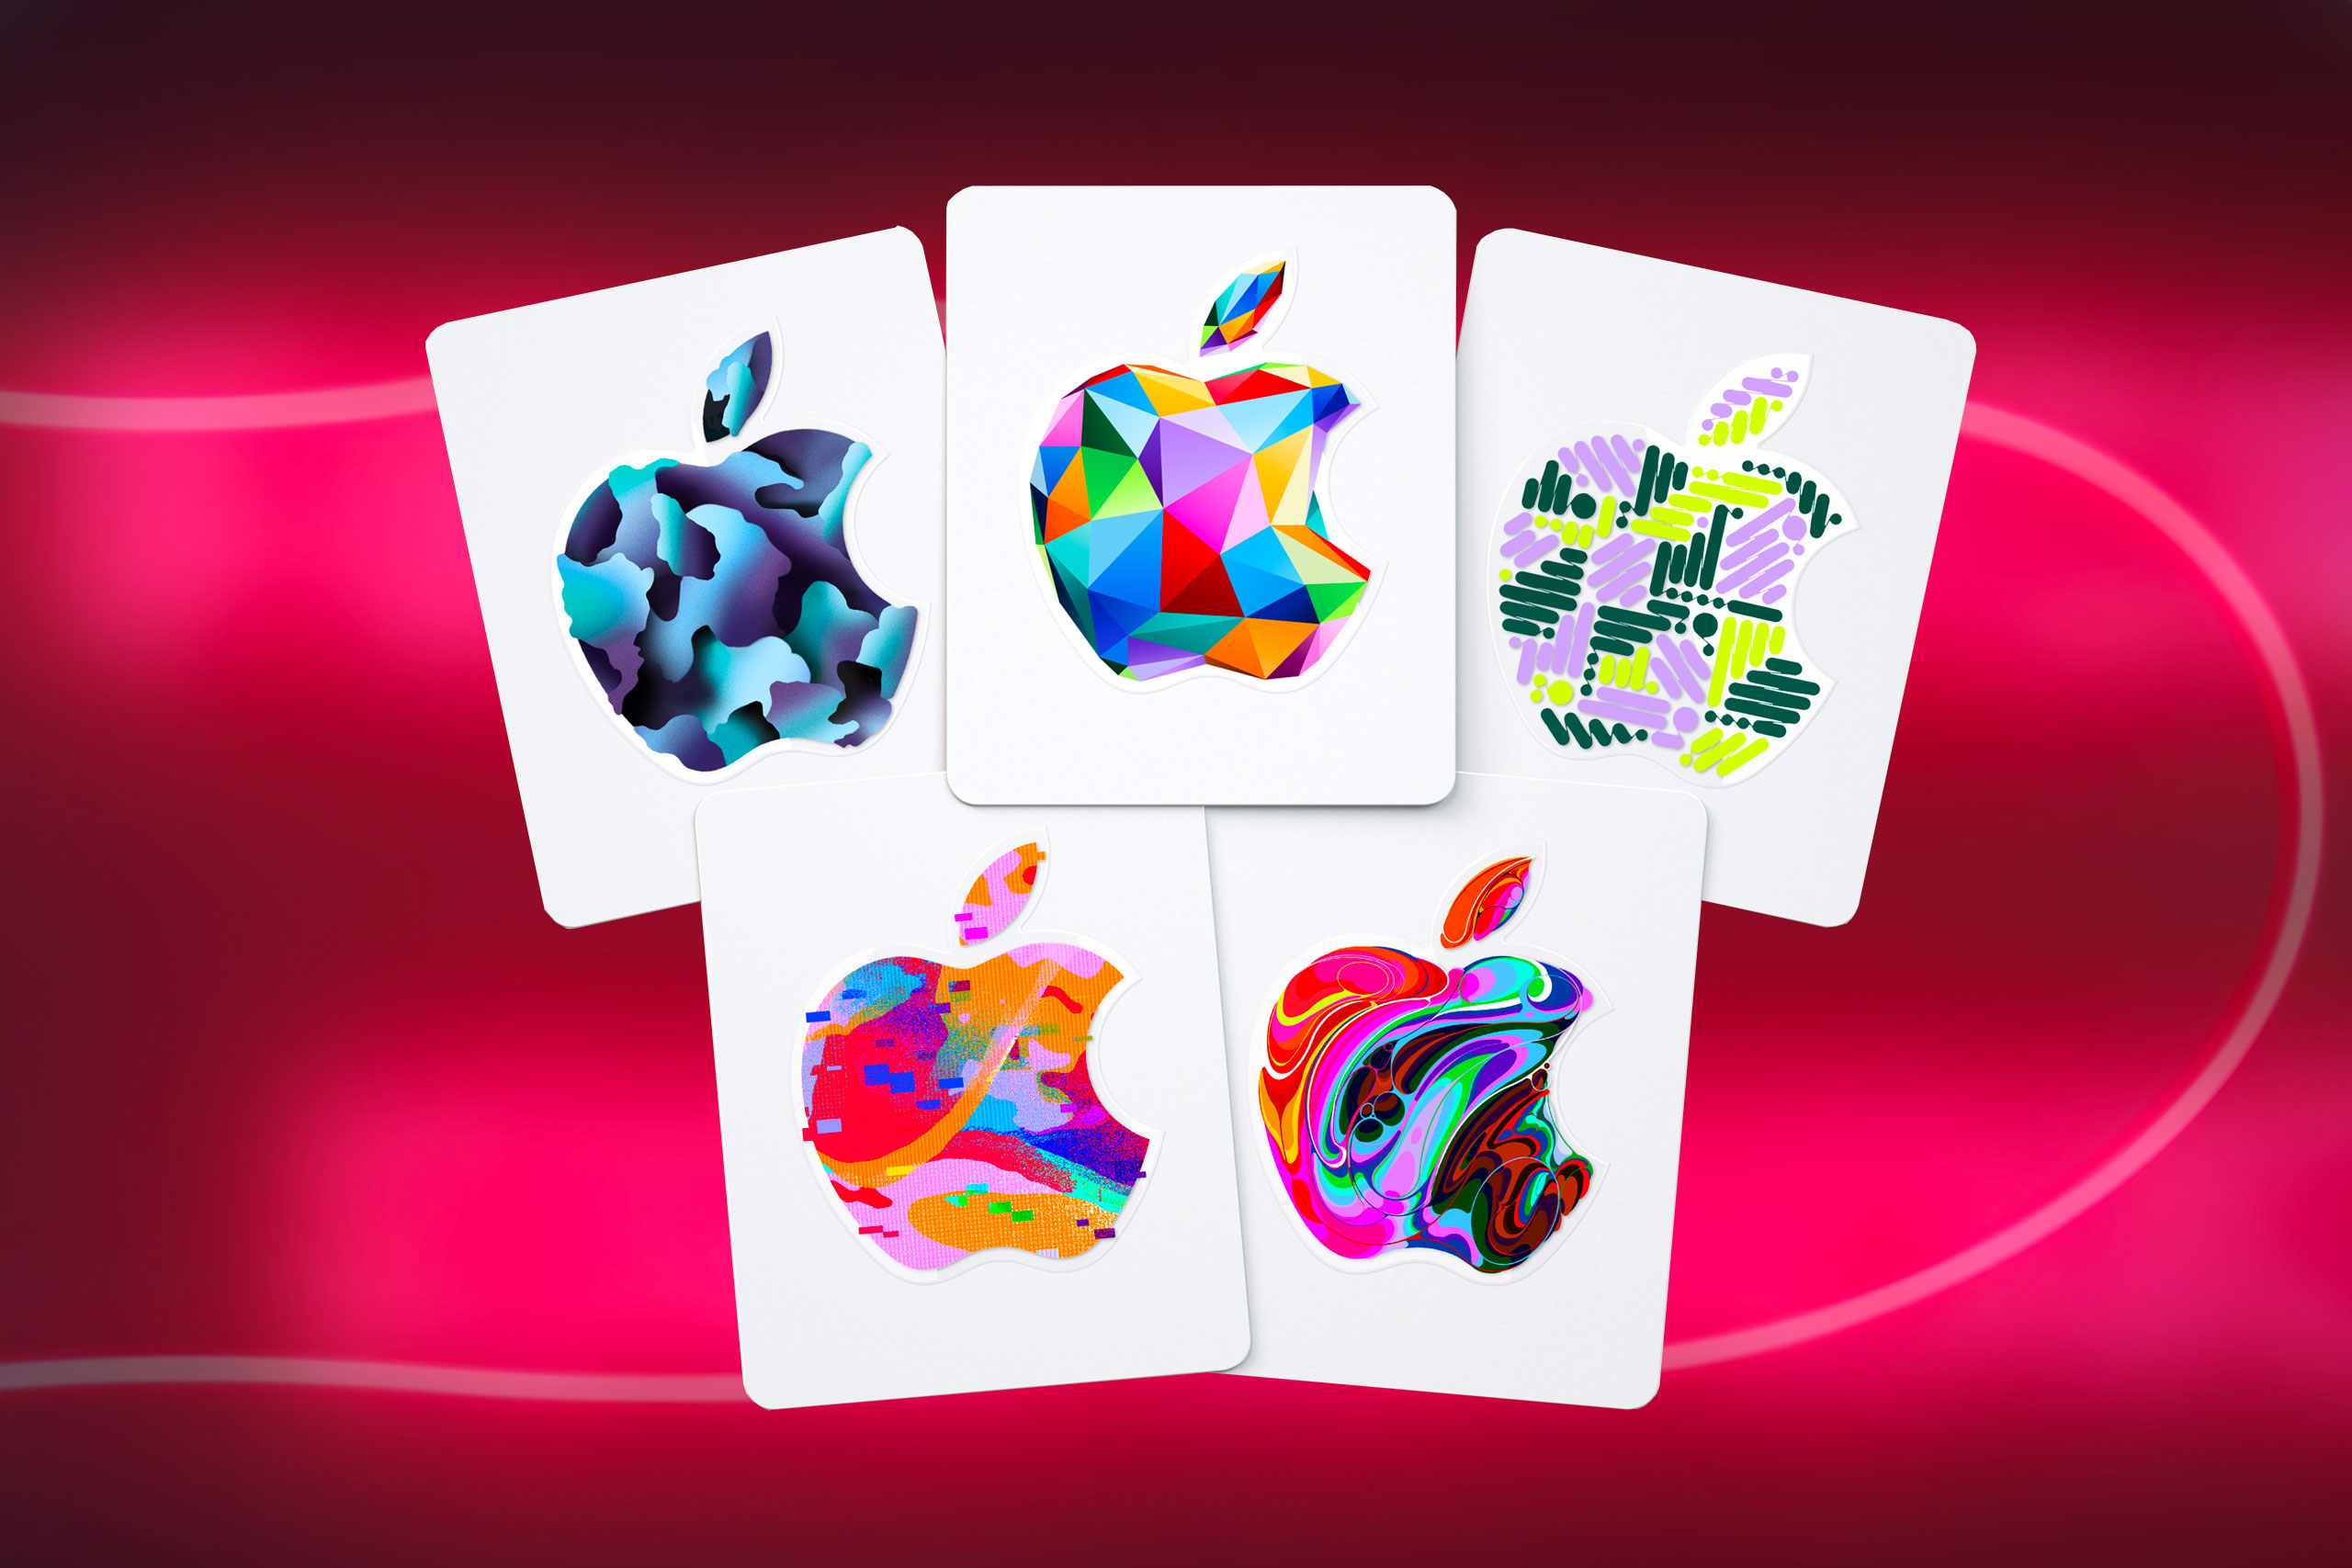 apple gift card redeem｜TikTok Search